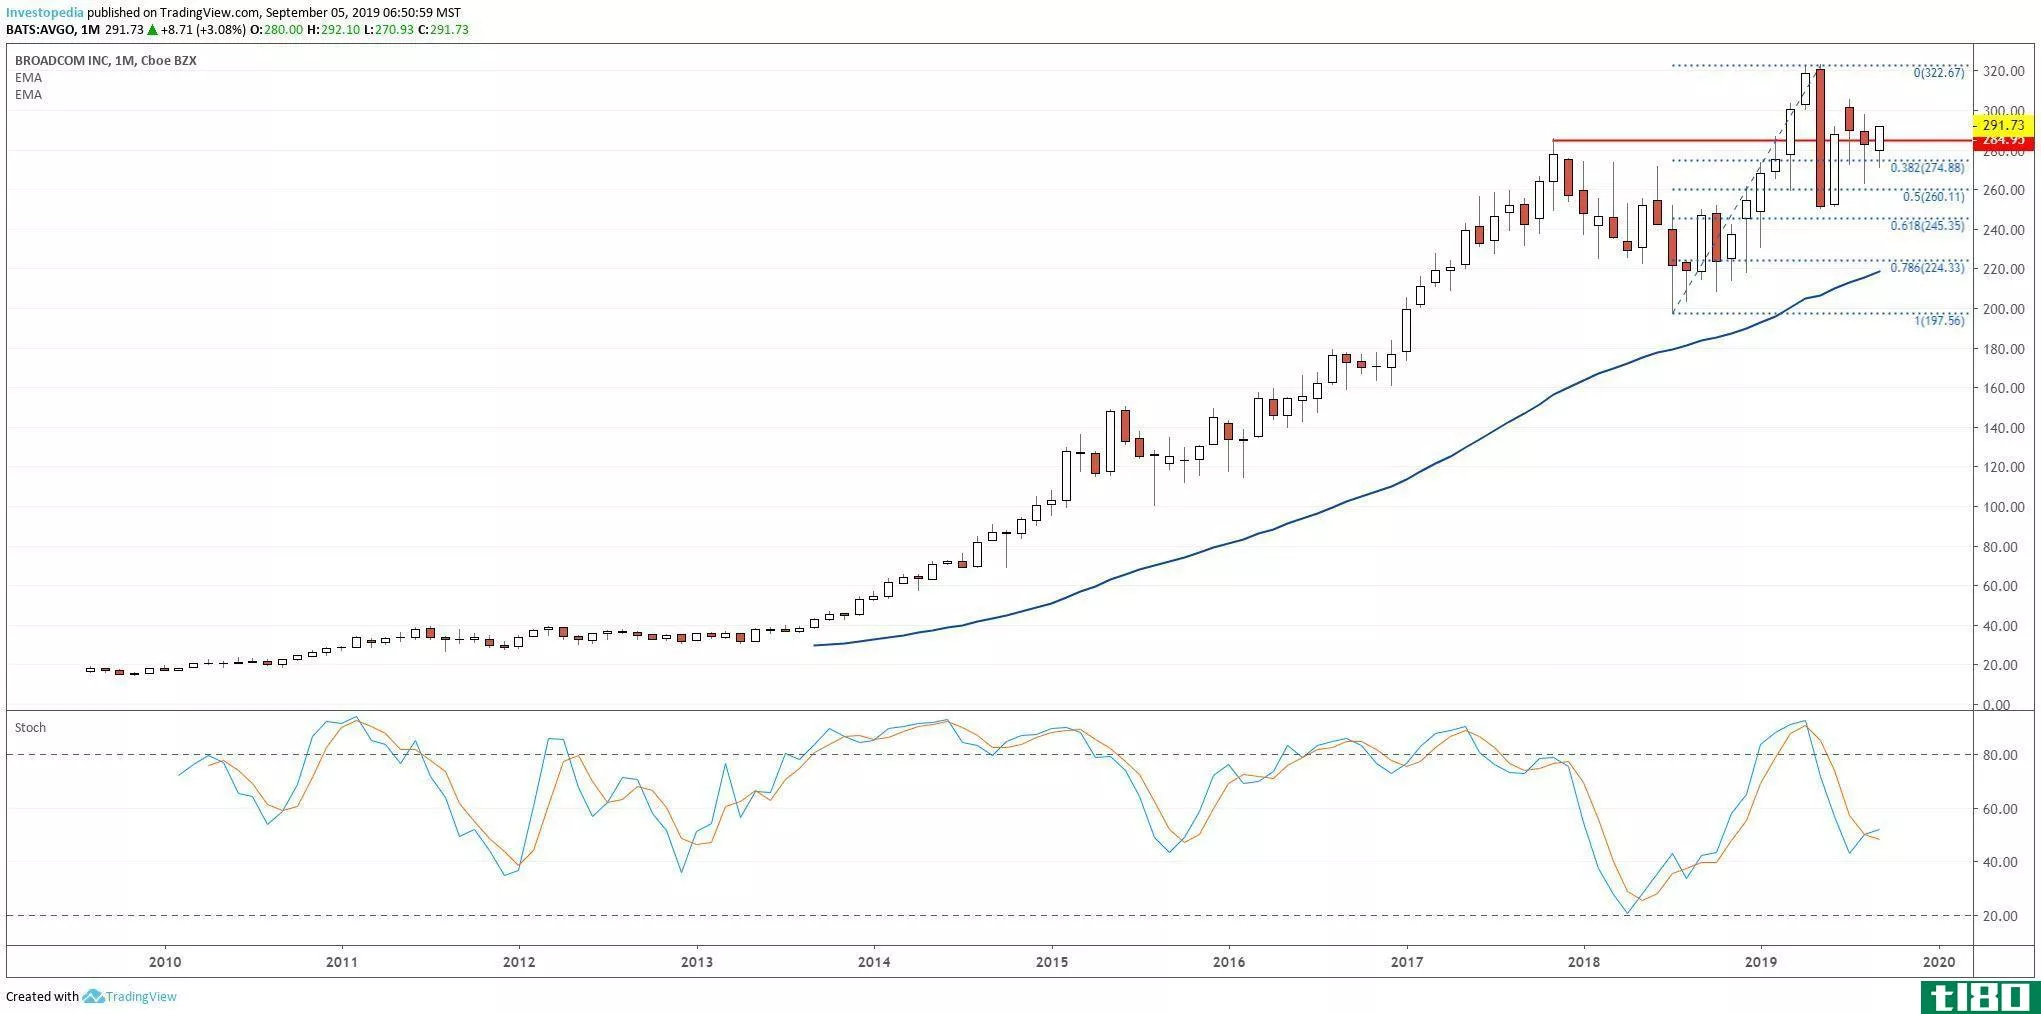 Long-term chart showing the share price performance of Broadcom Inc. (AVGO)